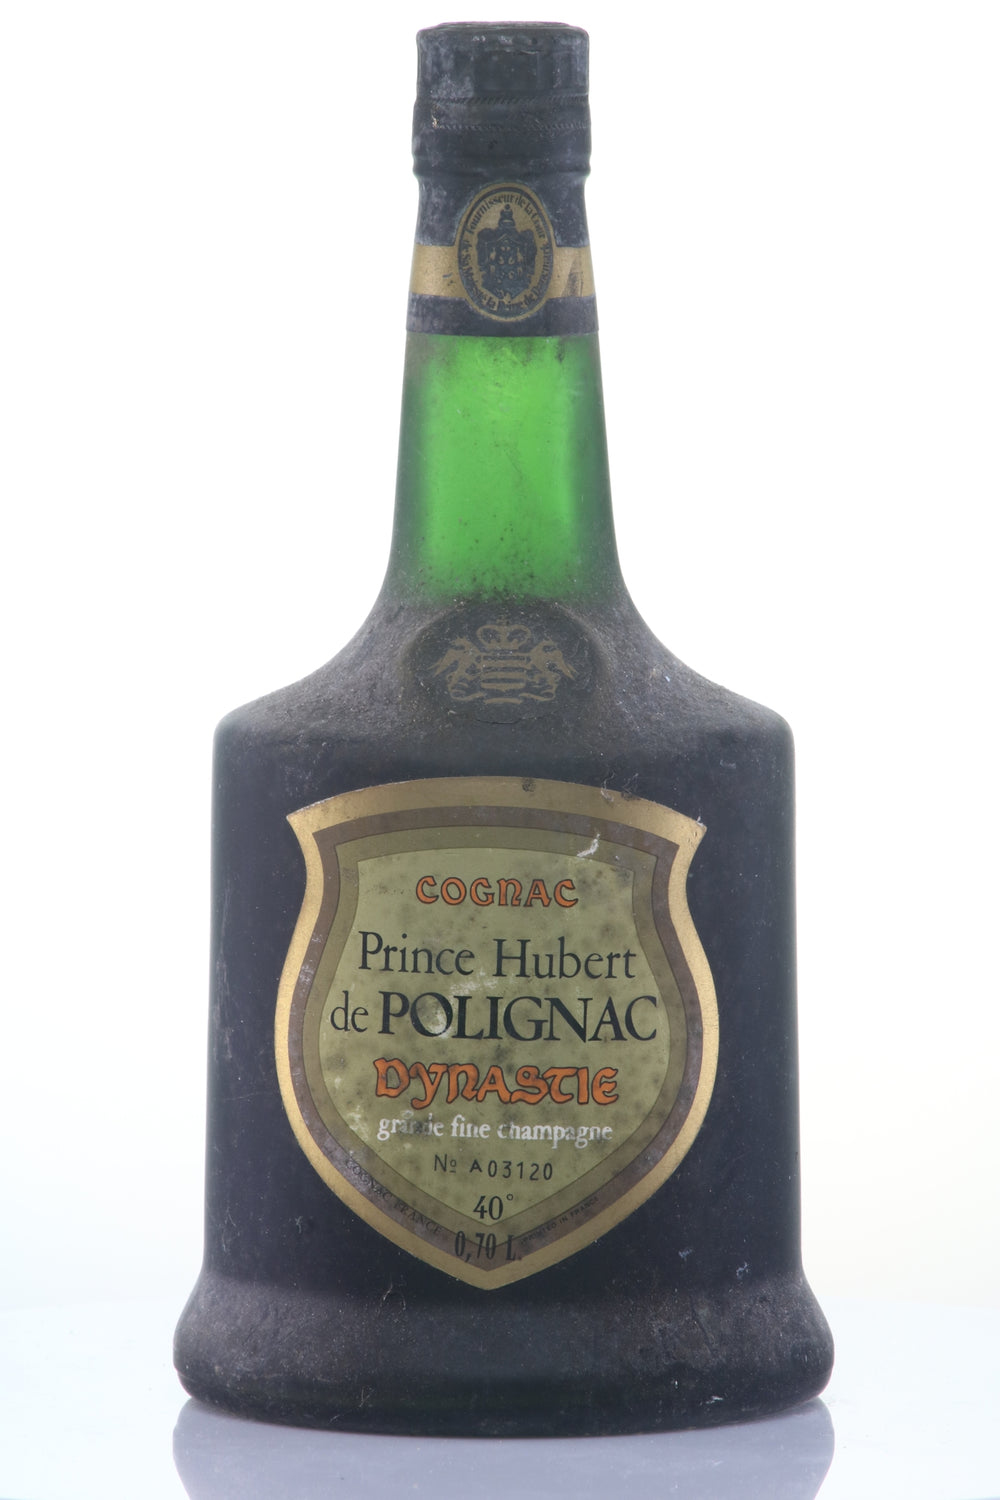 Prince Hubert de Polignac Cognac Dynastie Grand Fine Champagne No. A03120 (94 Wine Enthusiast) - Rue Pinard